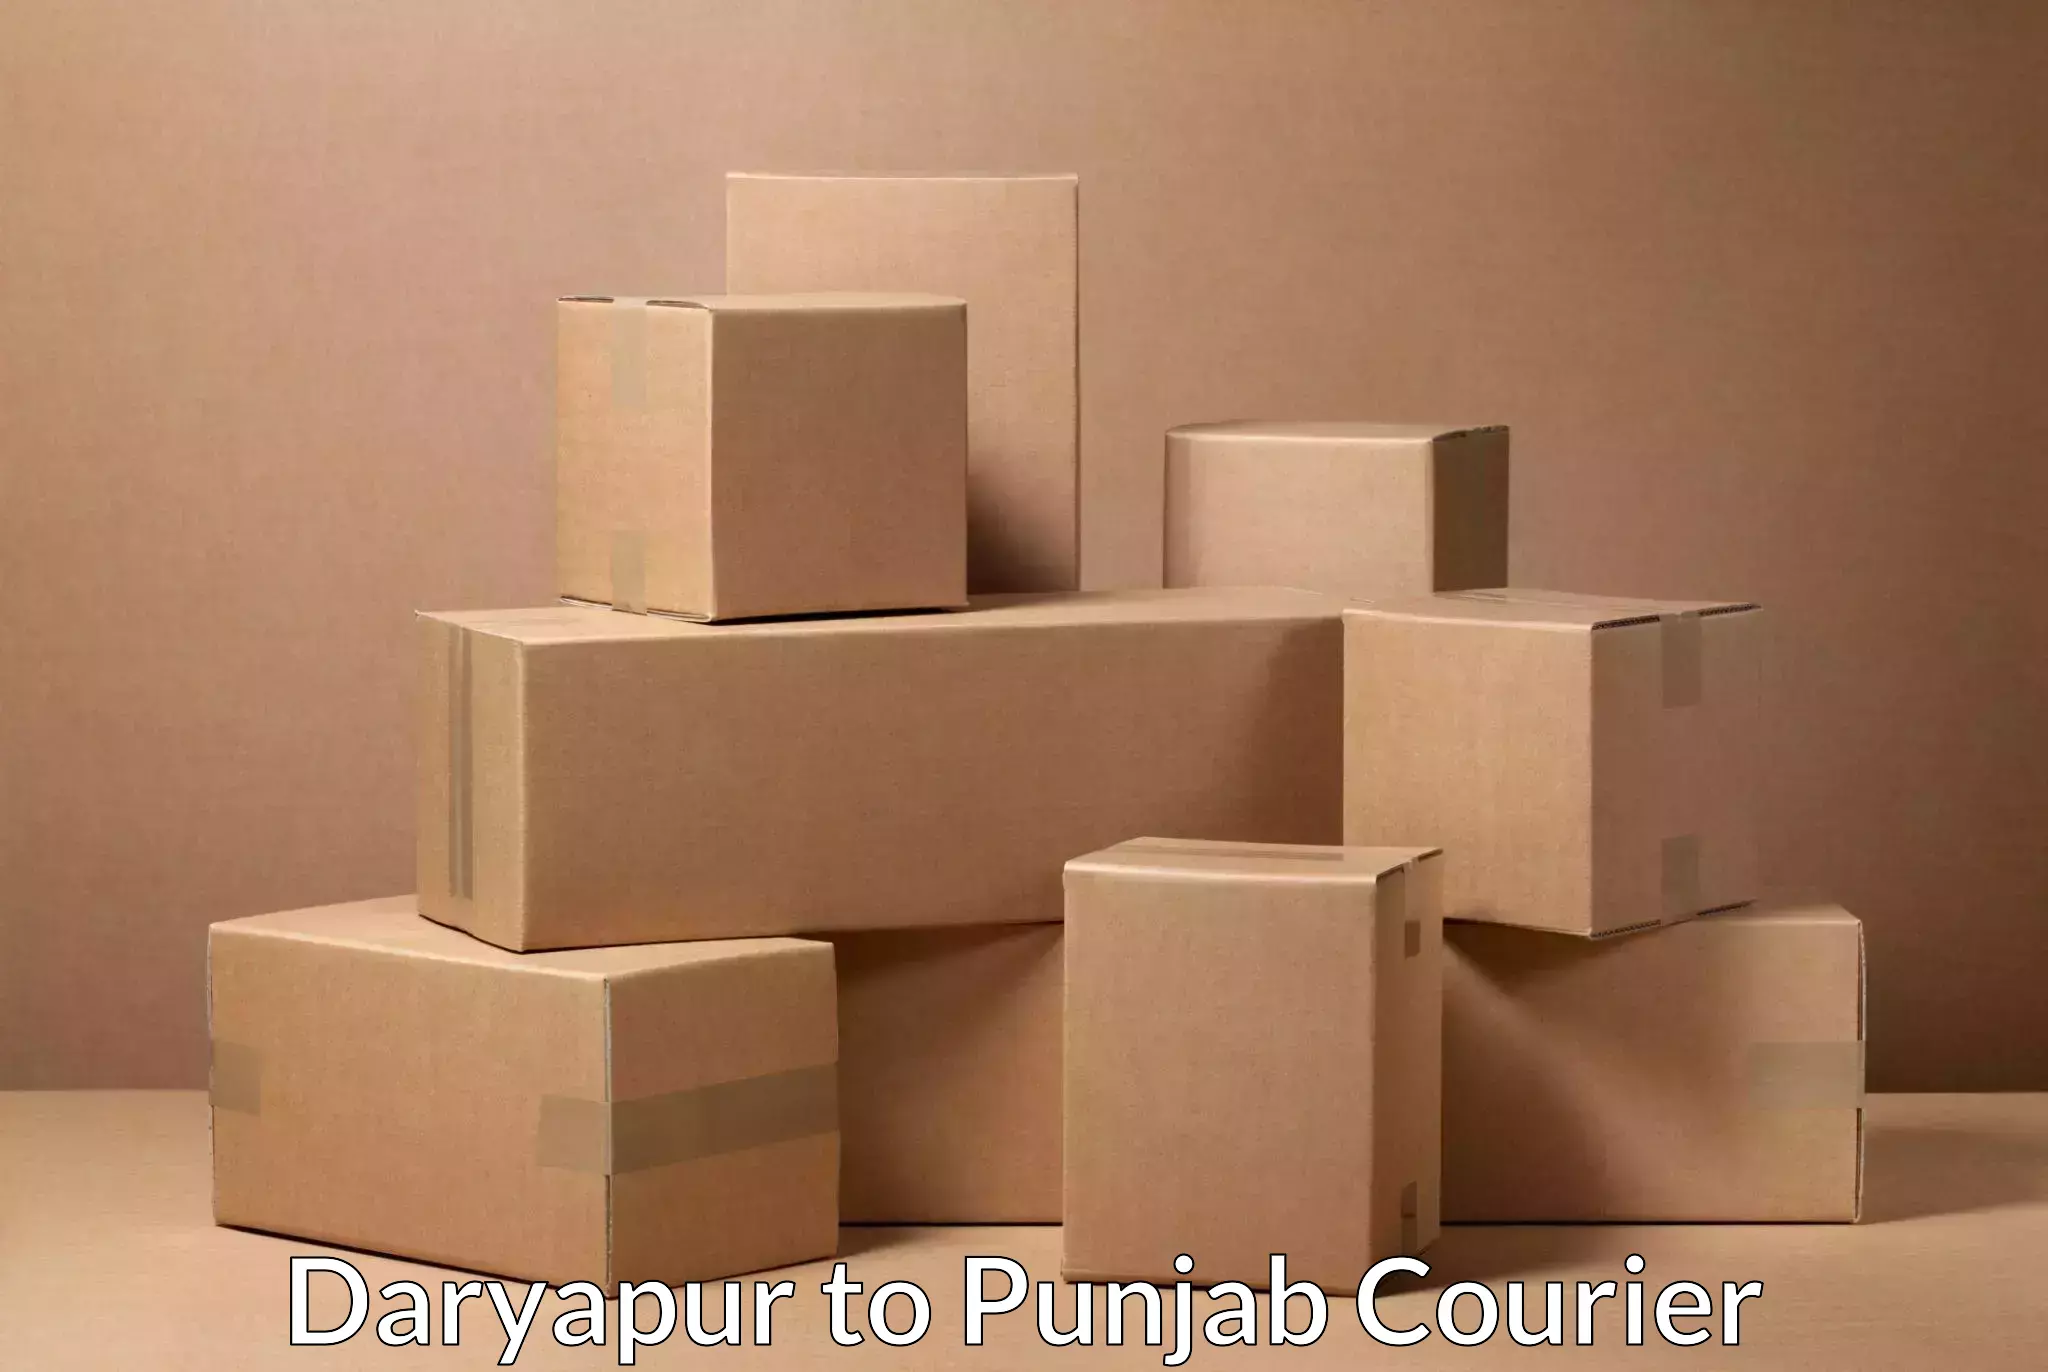 Courier service efficiency Daryapur to Dinanagar